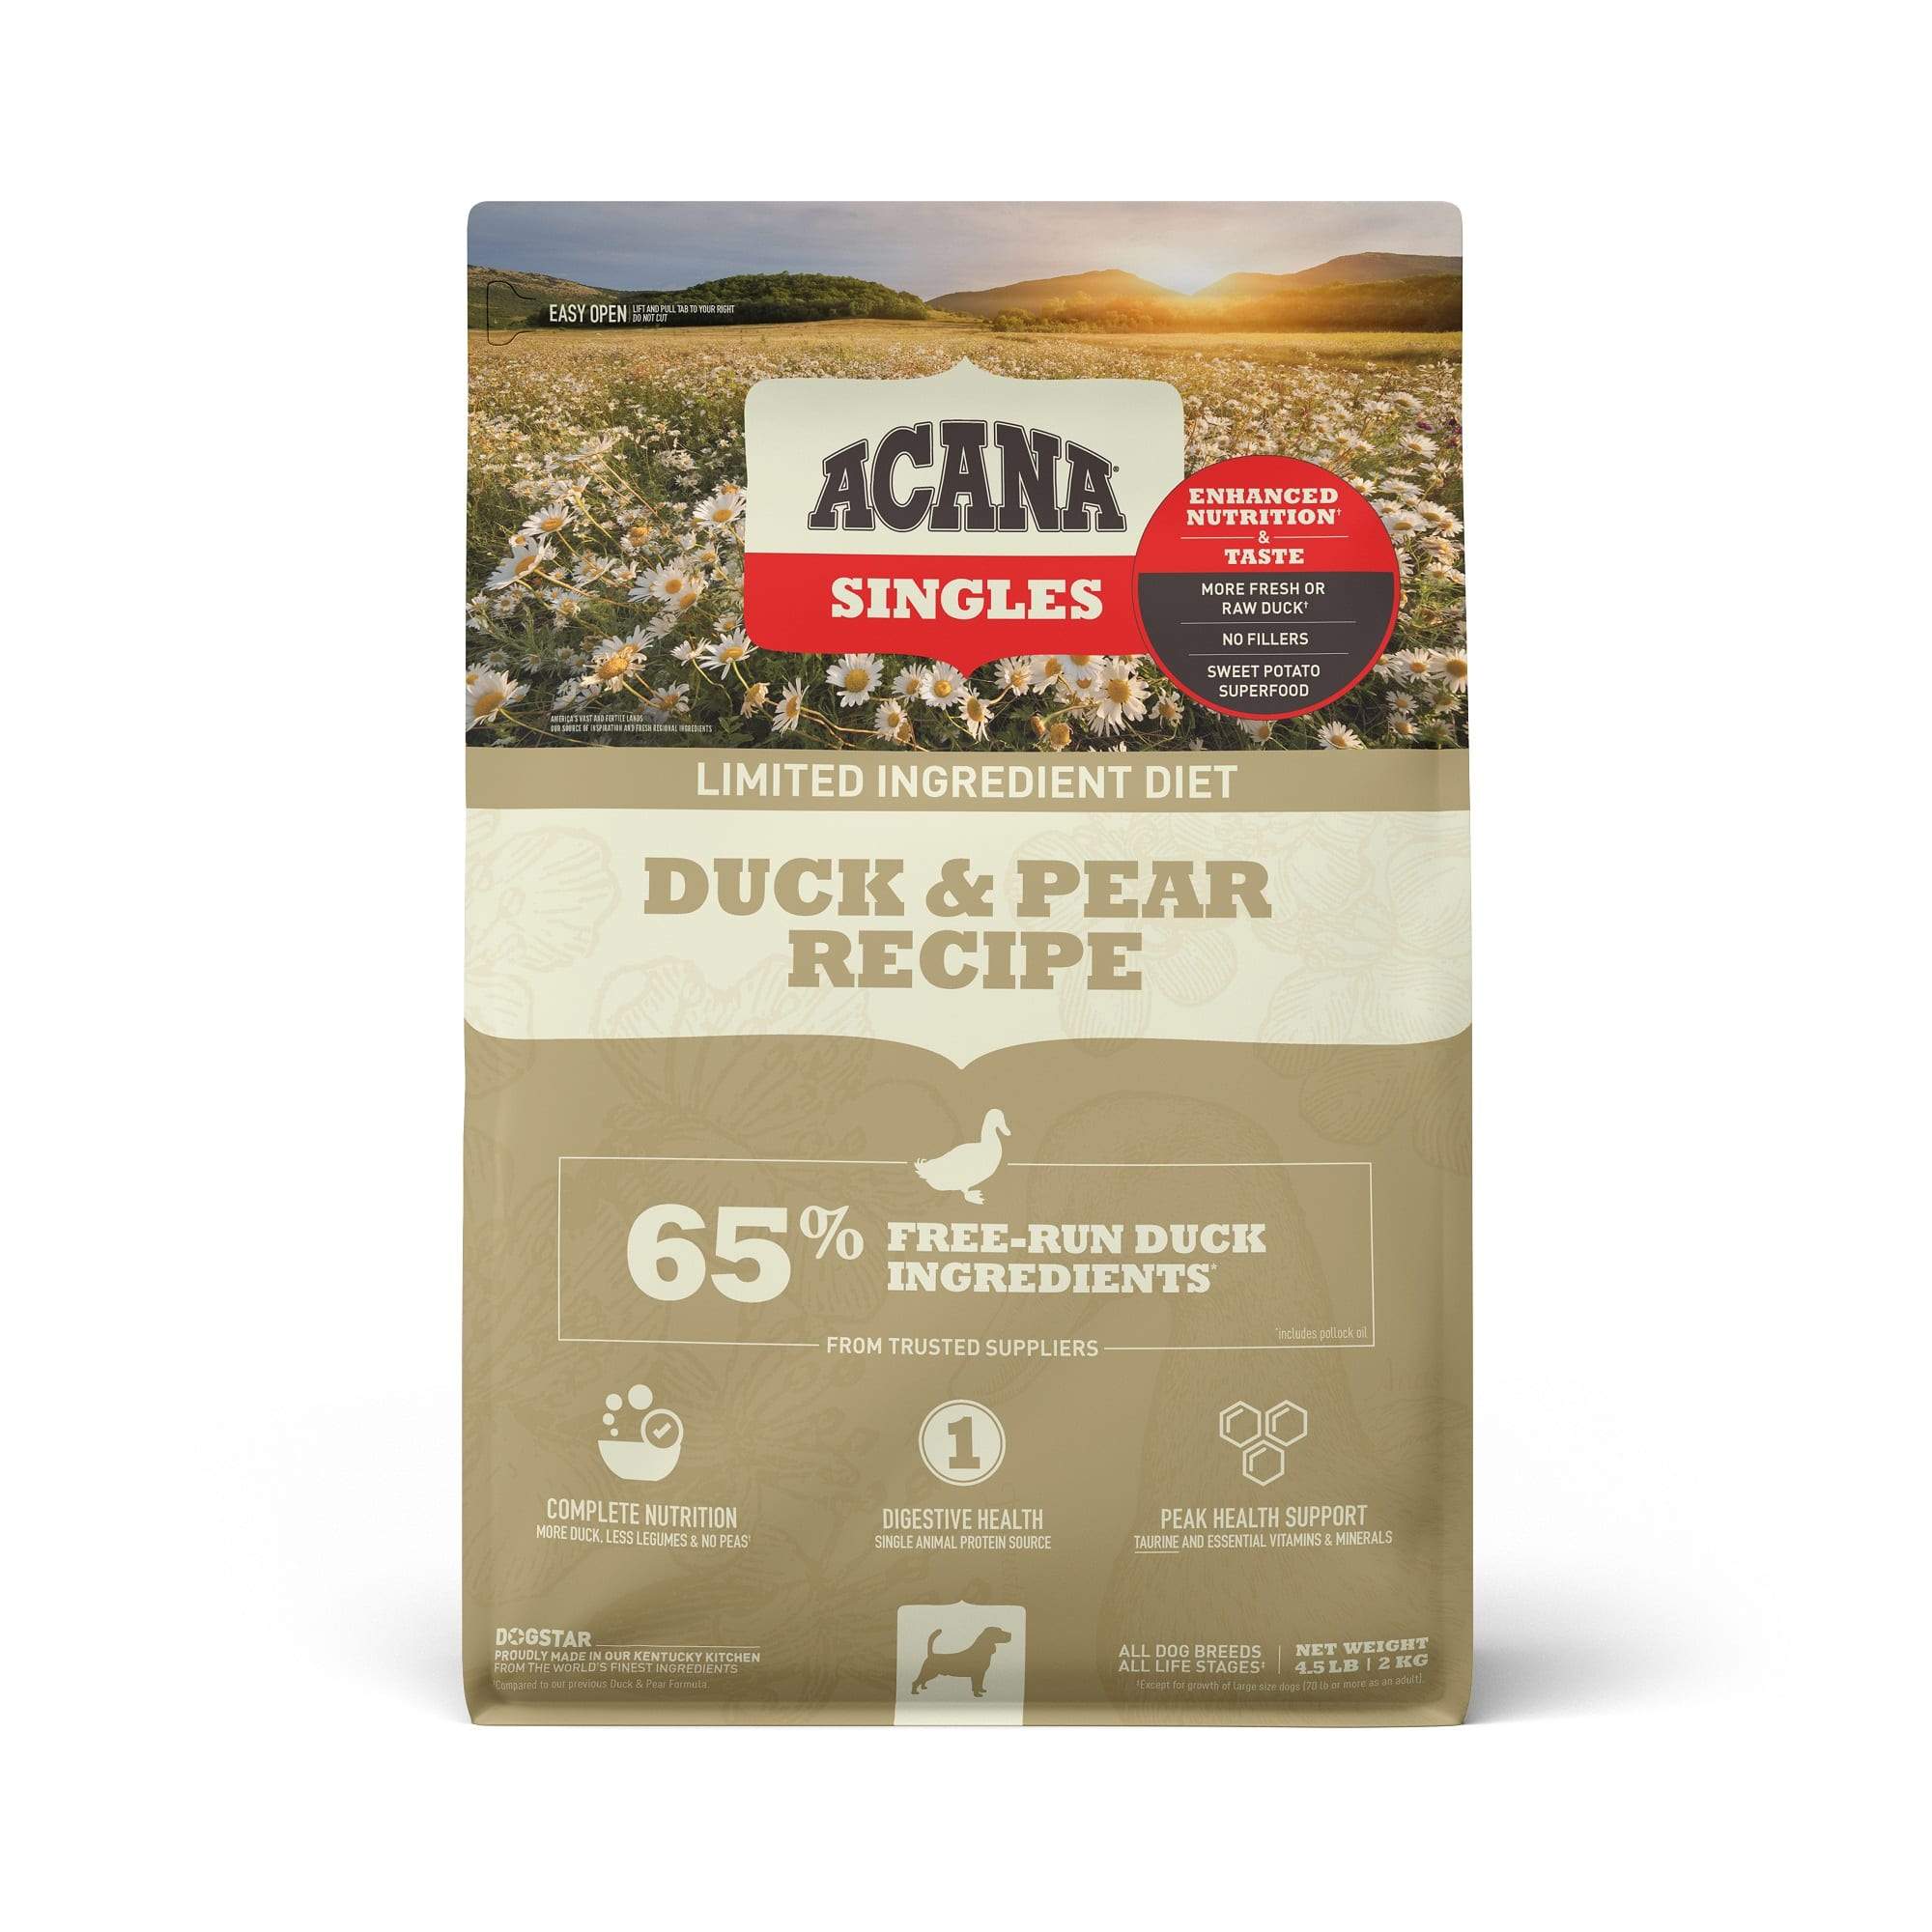 Acana 'Kentucky Dogstar Chicken' Singles Grain-Free Duck & Pear Dry Dog Food - 4.5 lb Bag  